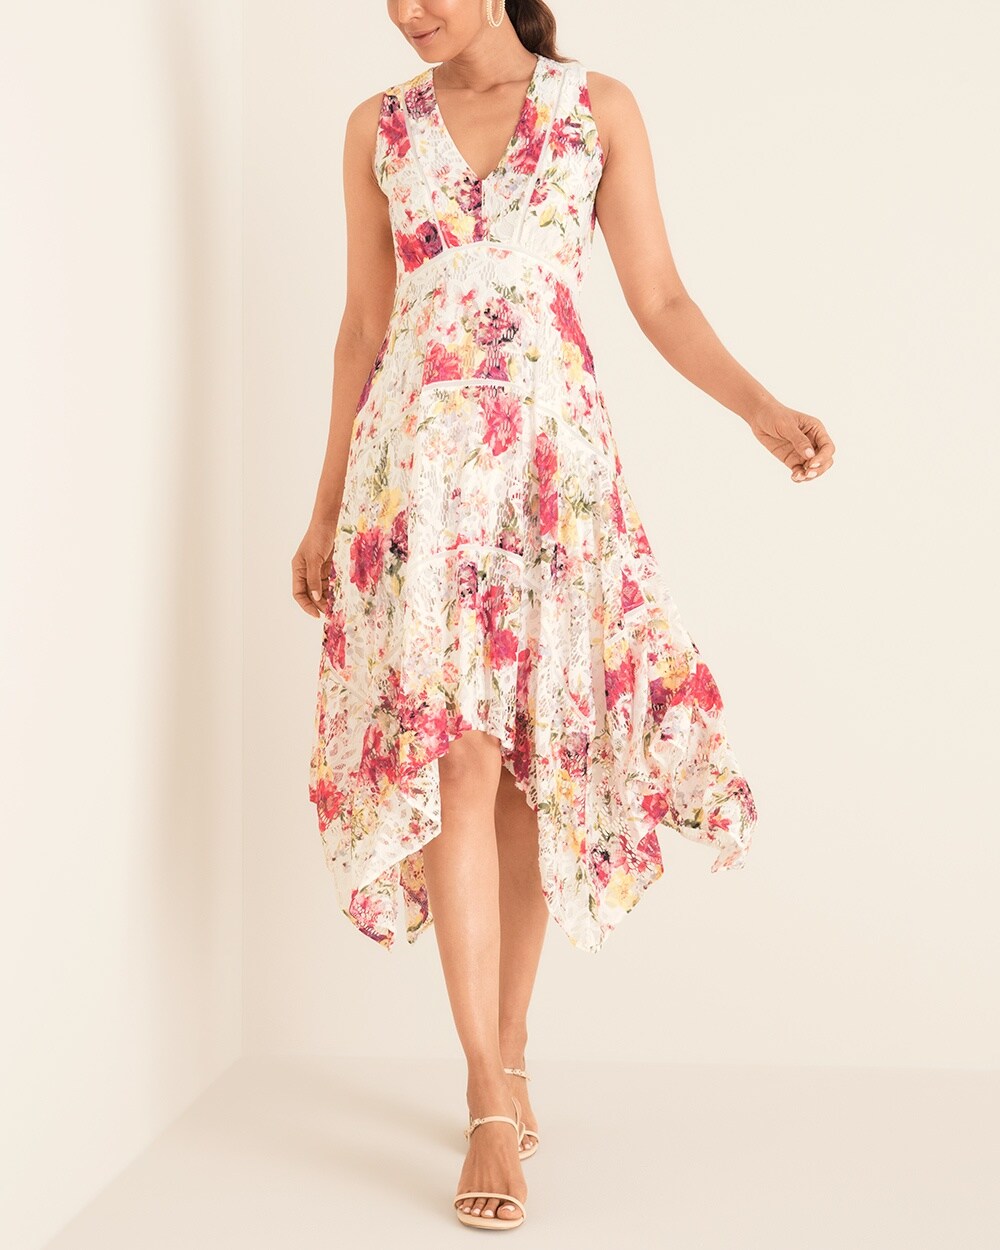 Taylor Floral-Print Stretch-Lace Dress